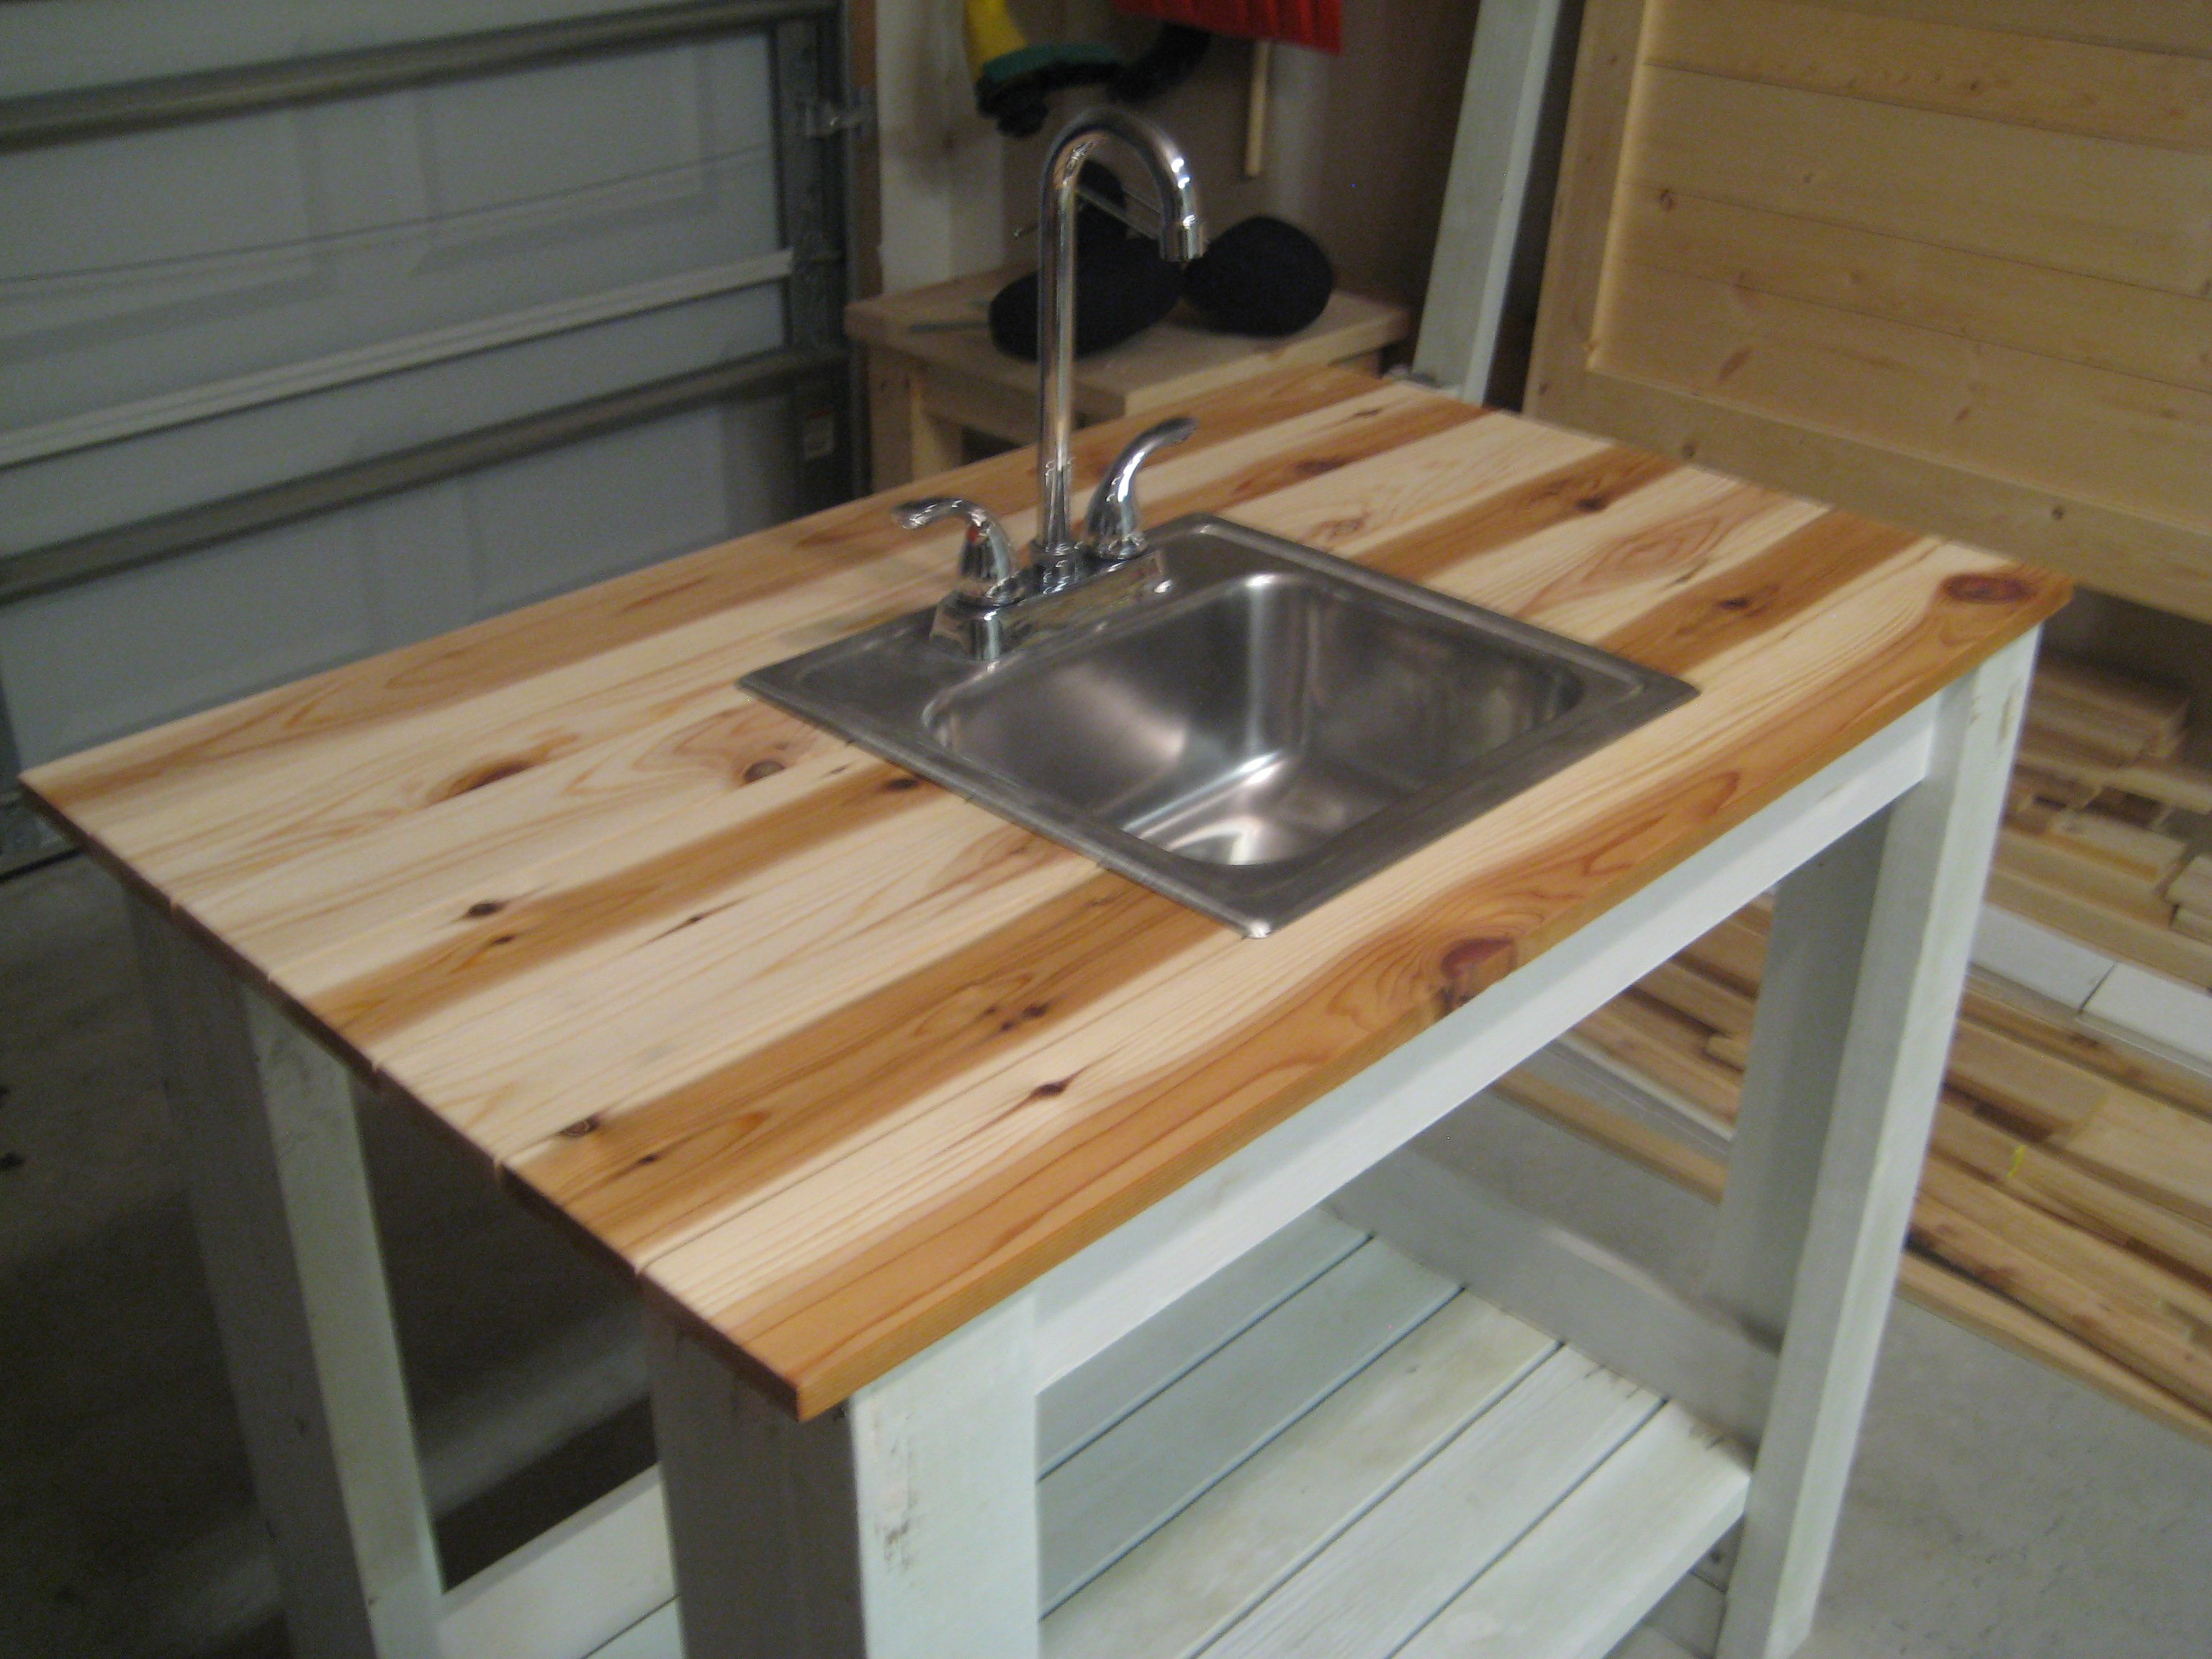 convert your kitchen sink to an outdoor spiket